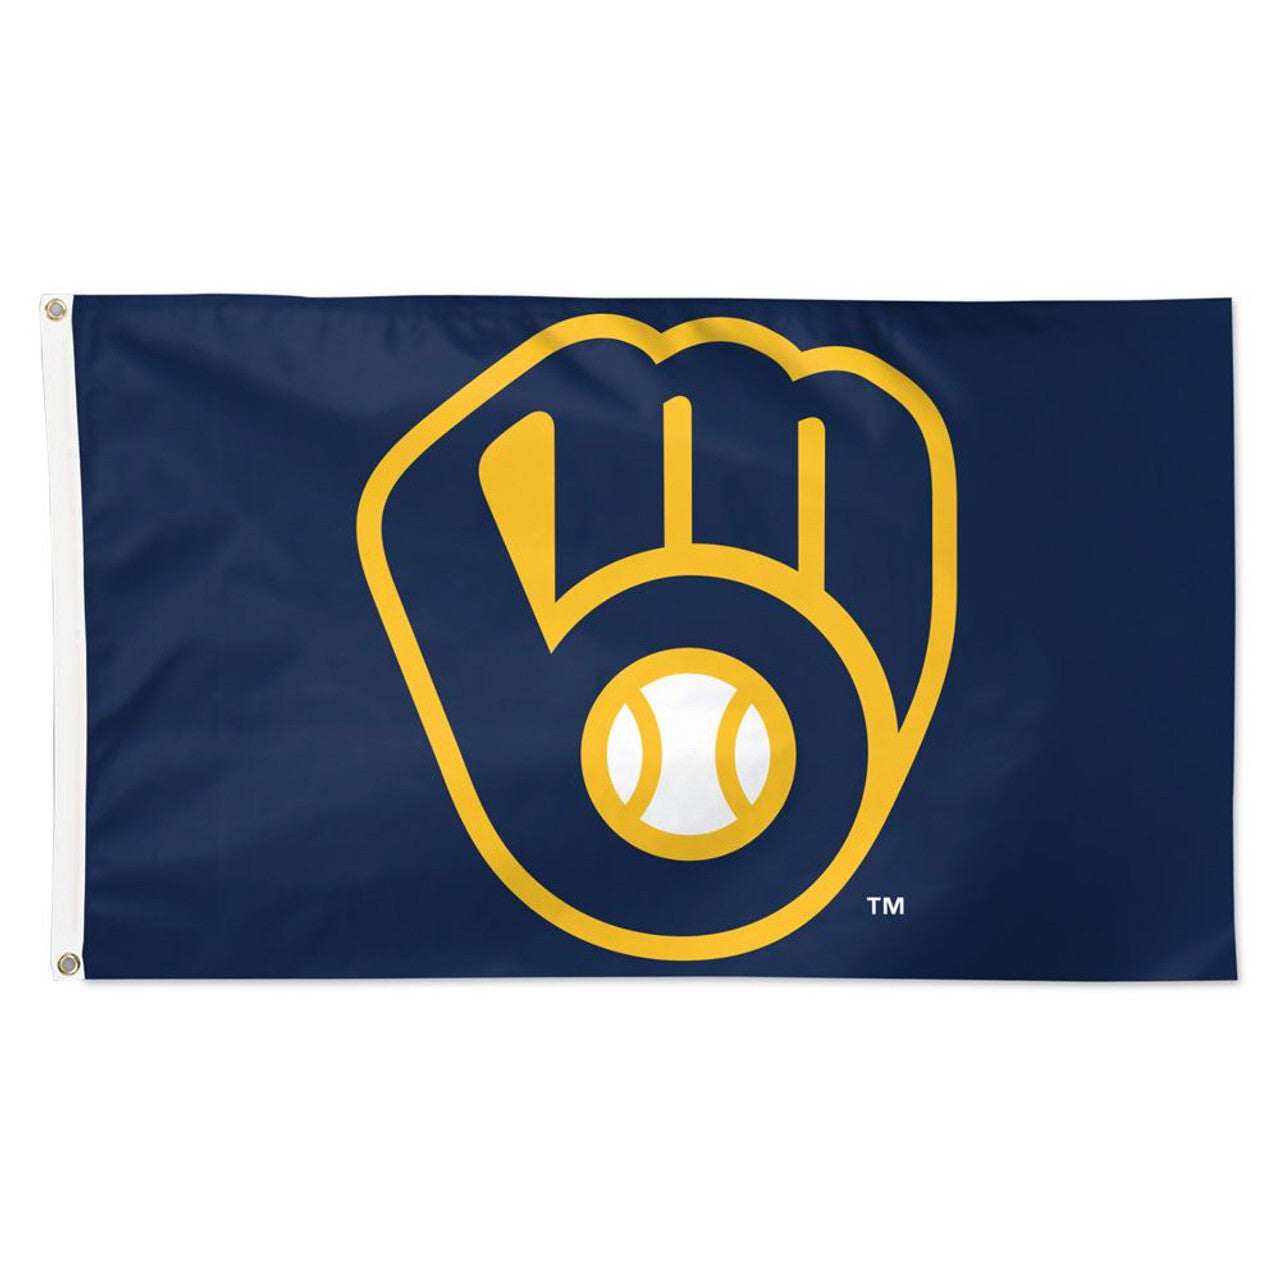 Milwaukee Brewers Flag 3x5 Team